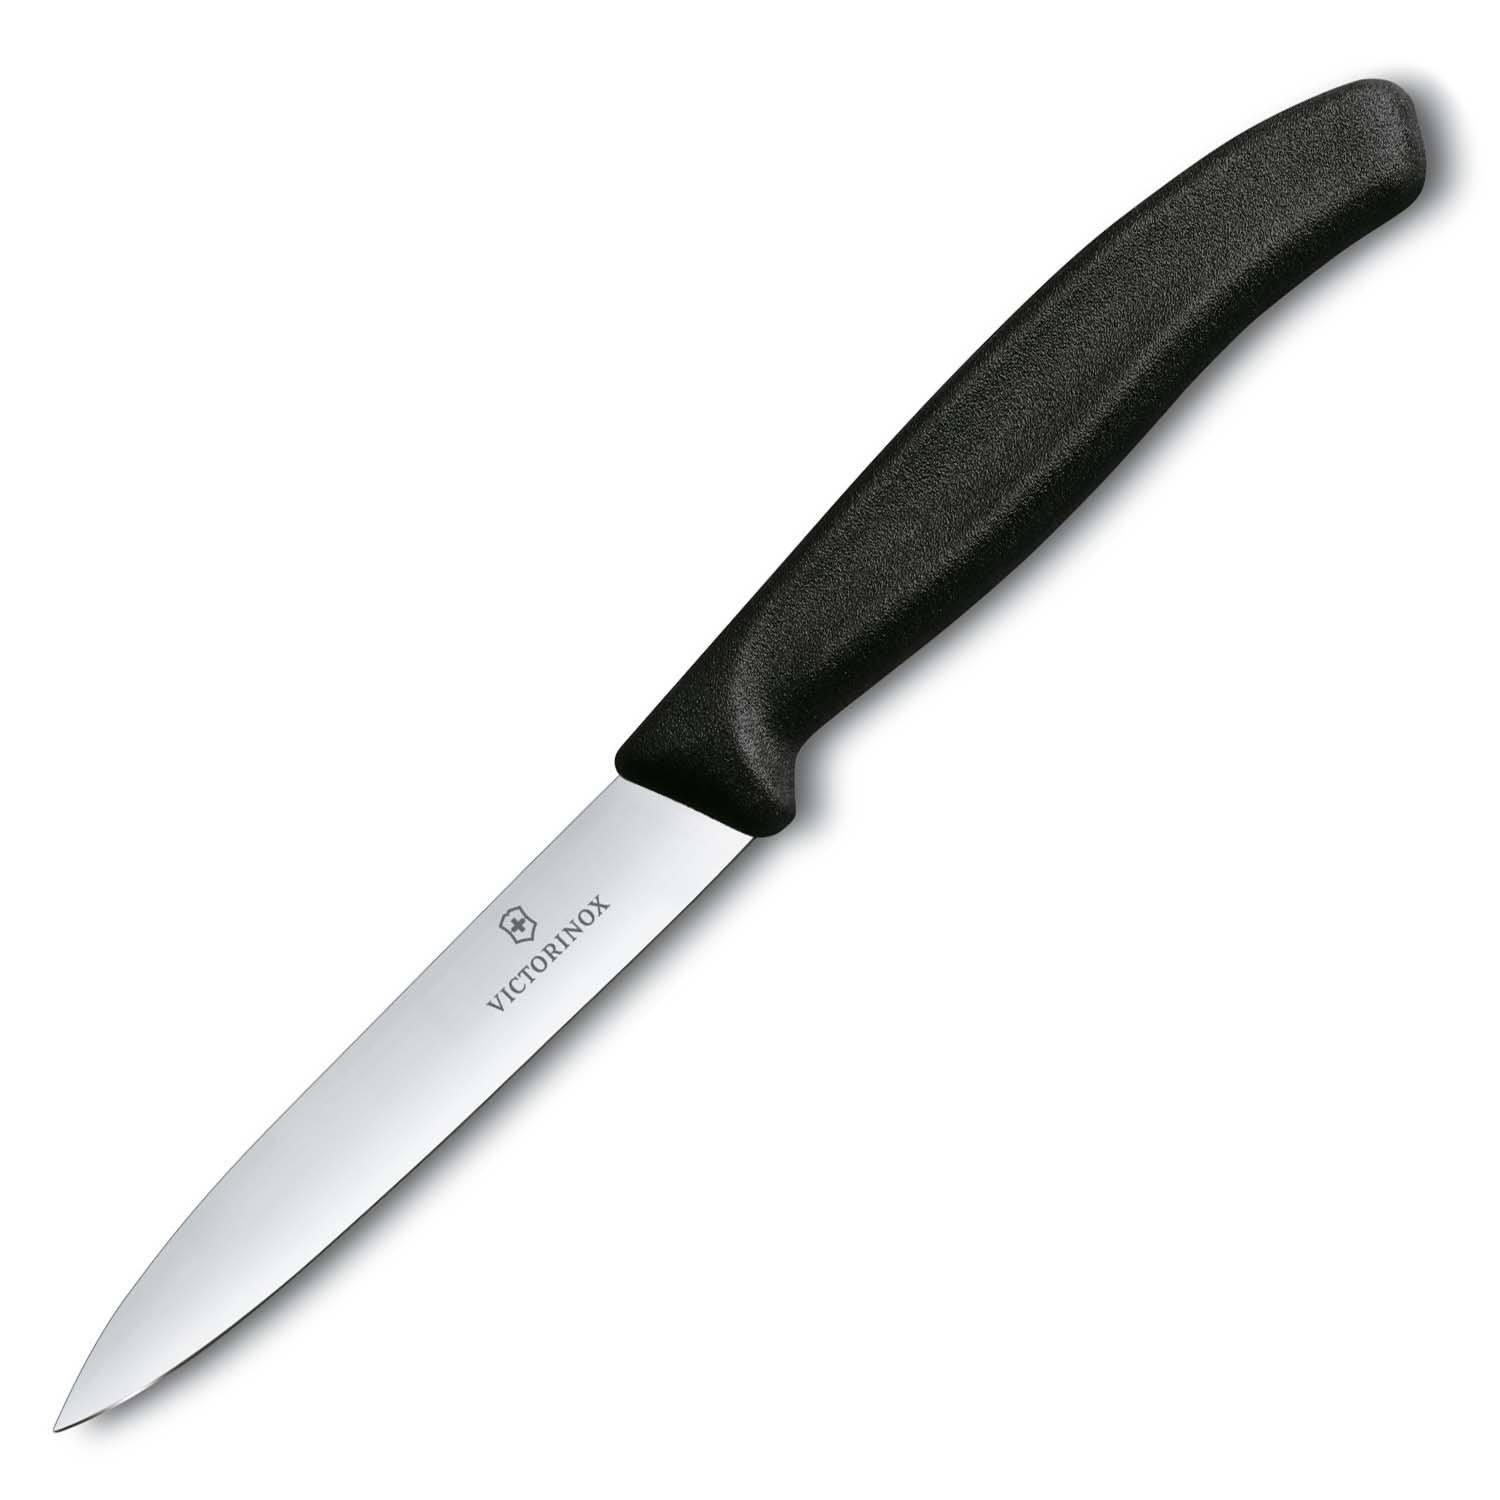 Victorinox Classic Paring Knife